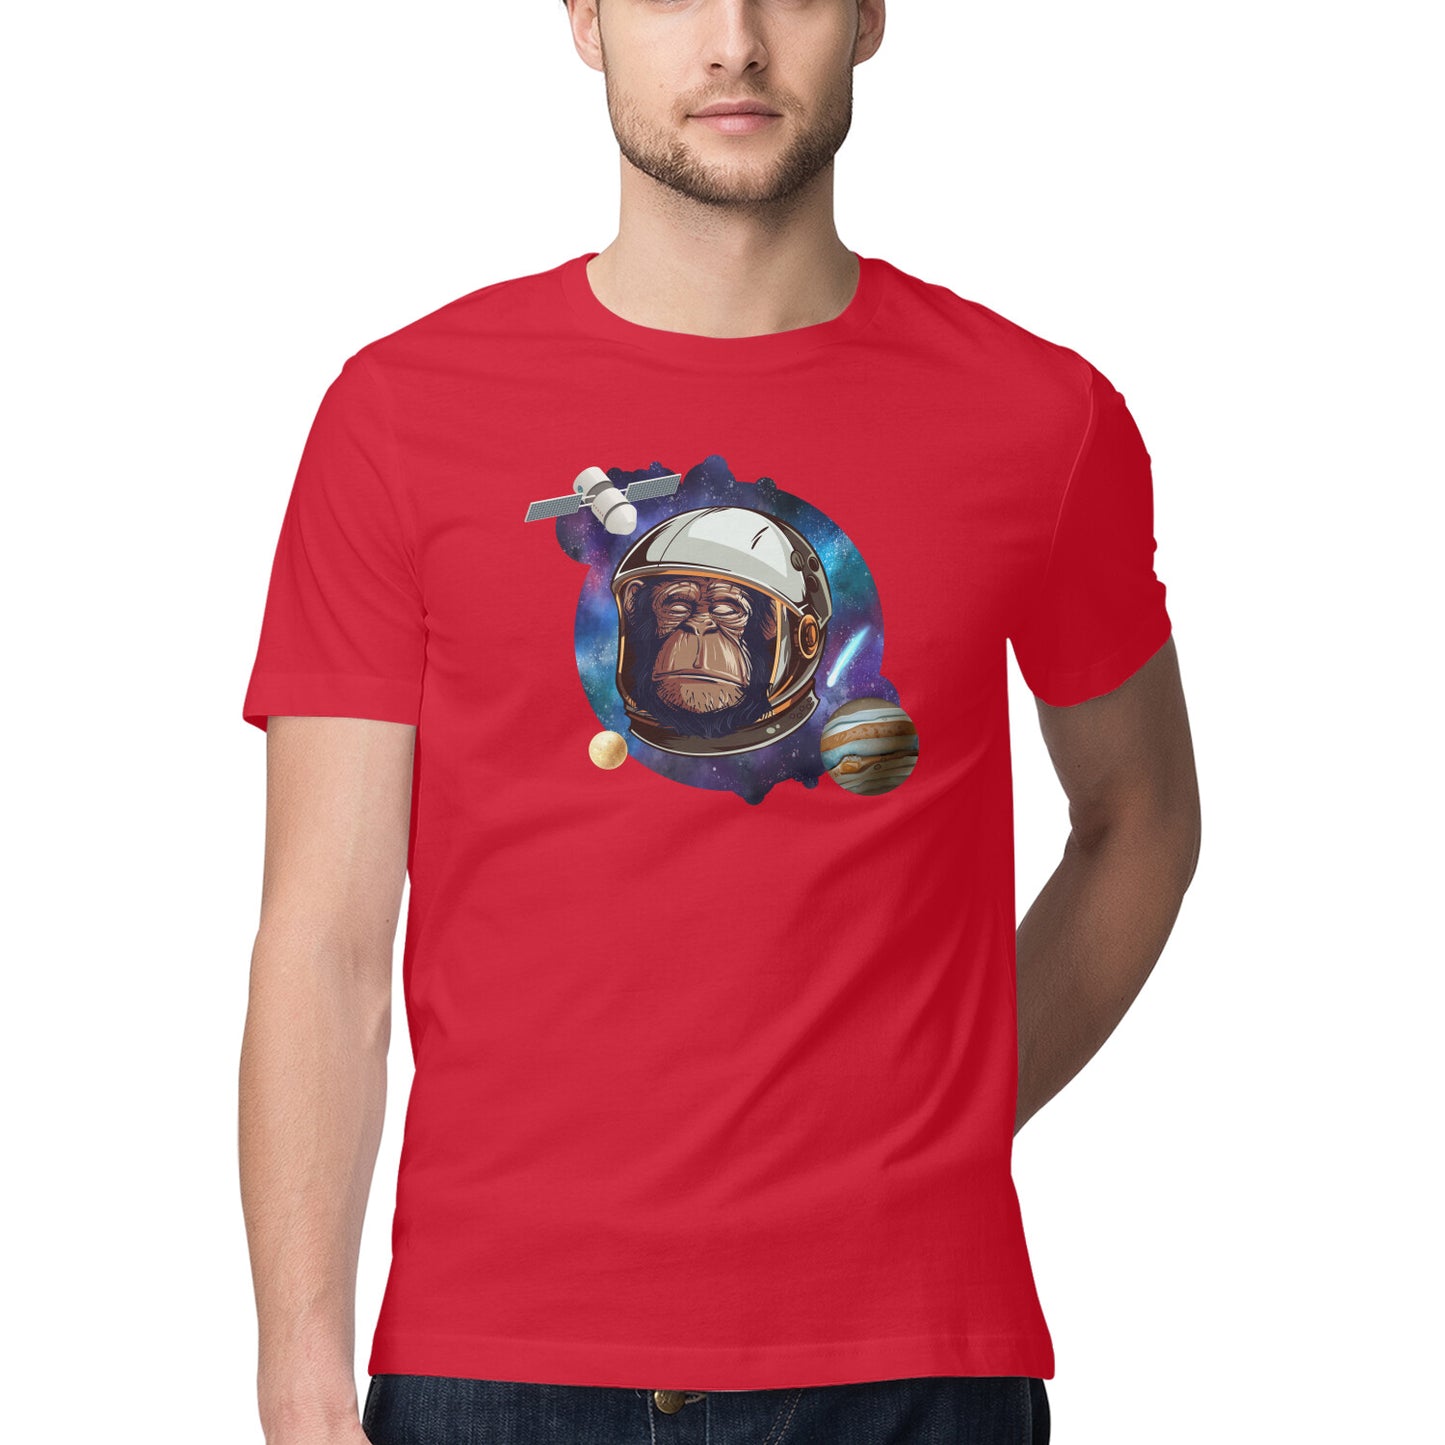 Chimp Astronaut Printed T-Shirt